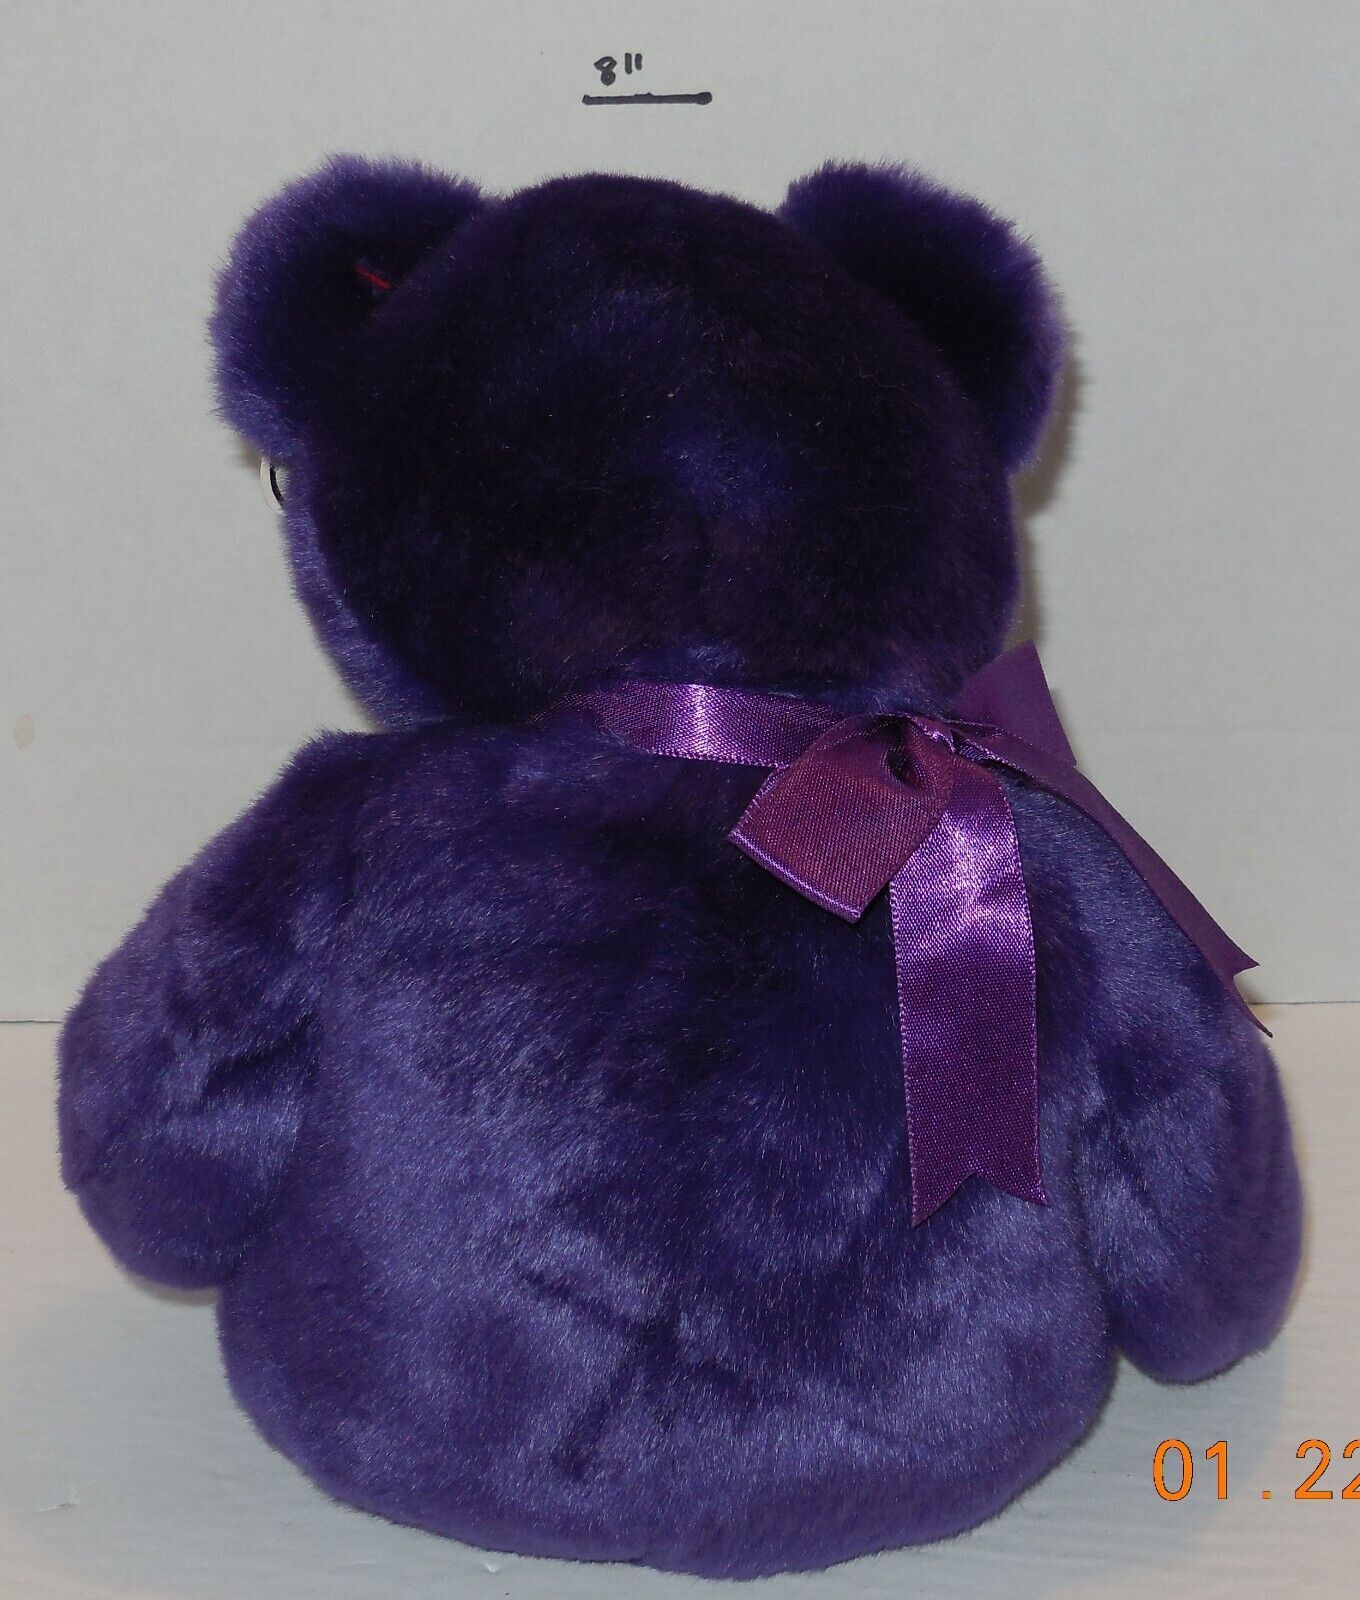 Vintage Ty Princess The Bear 12" Beanie Buddy plush toy princess Diana - $14.50